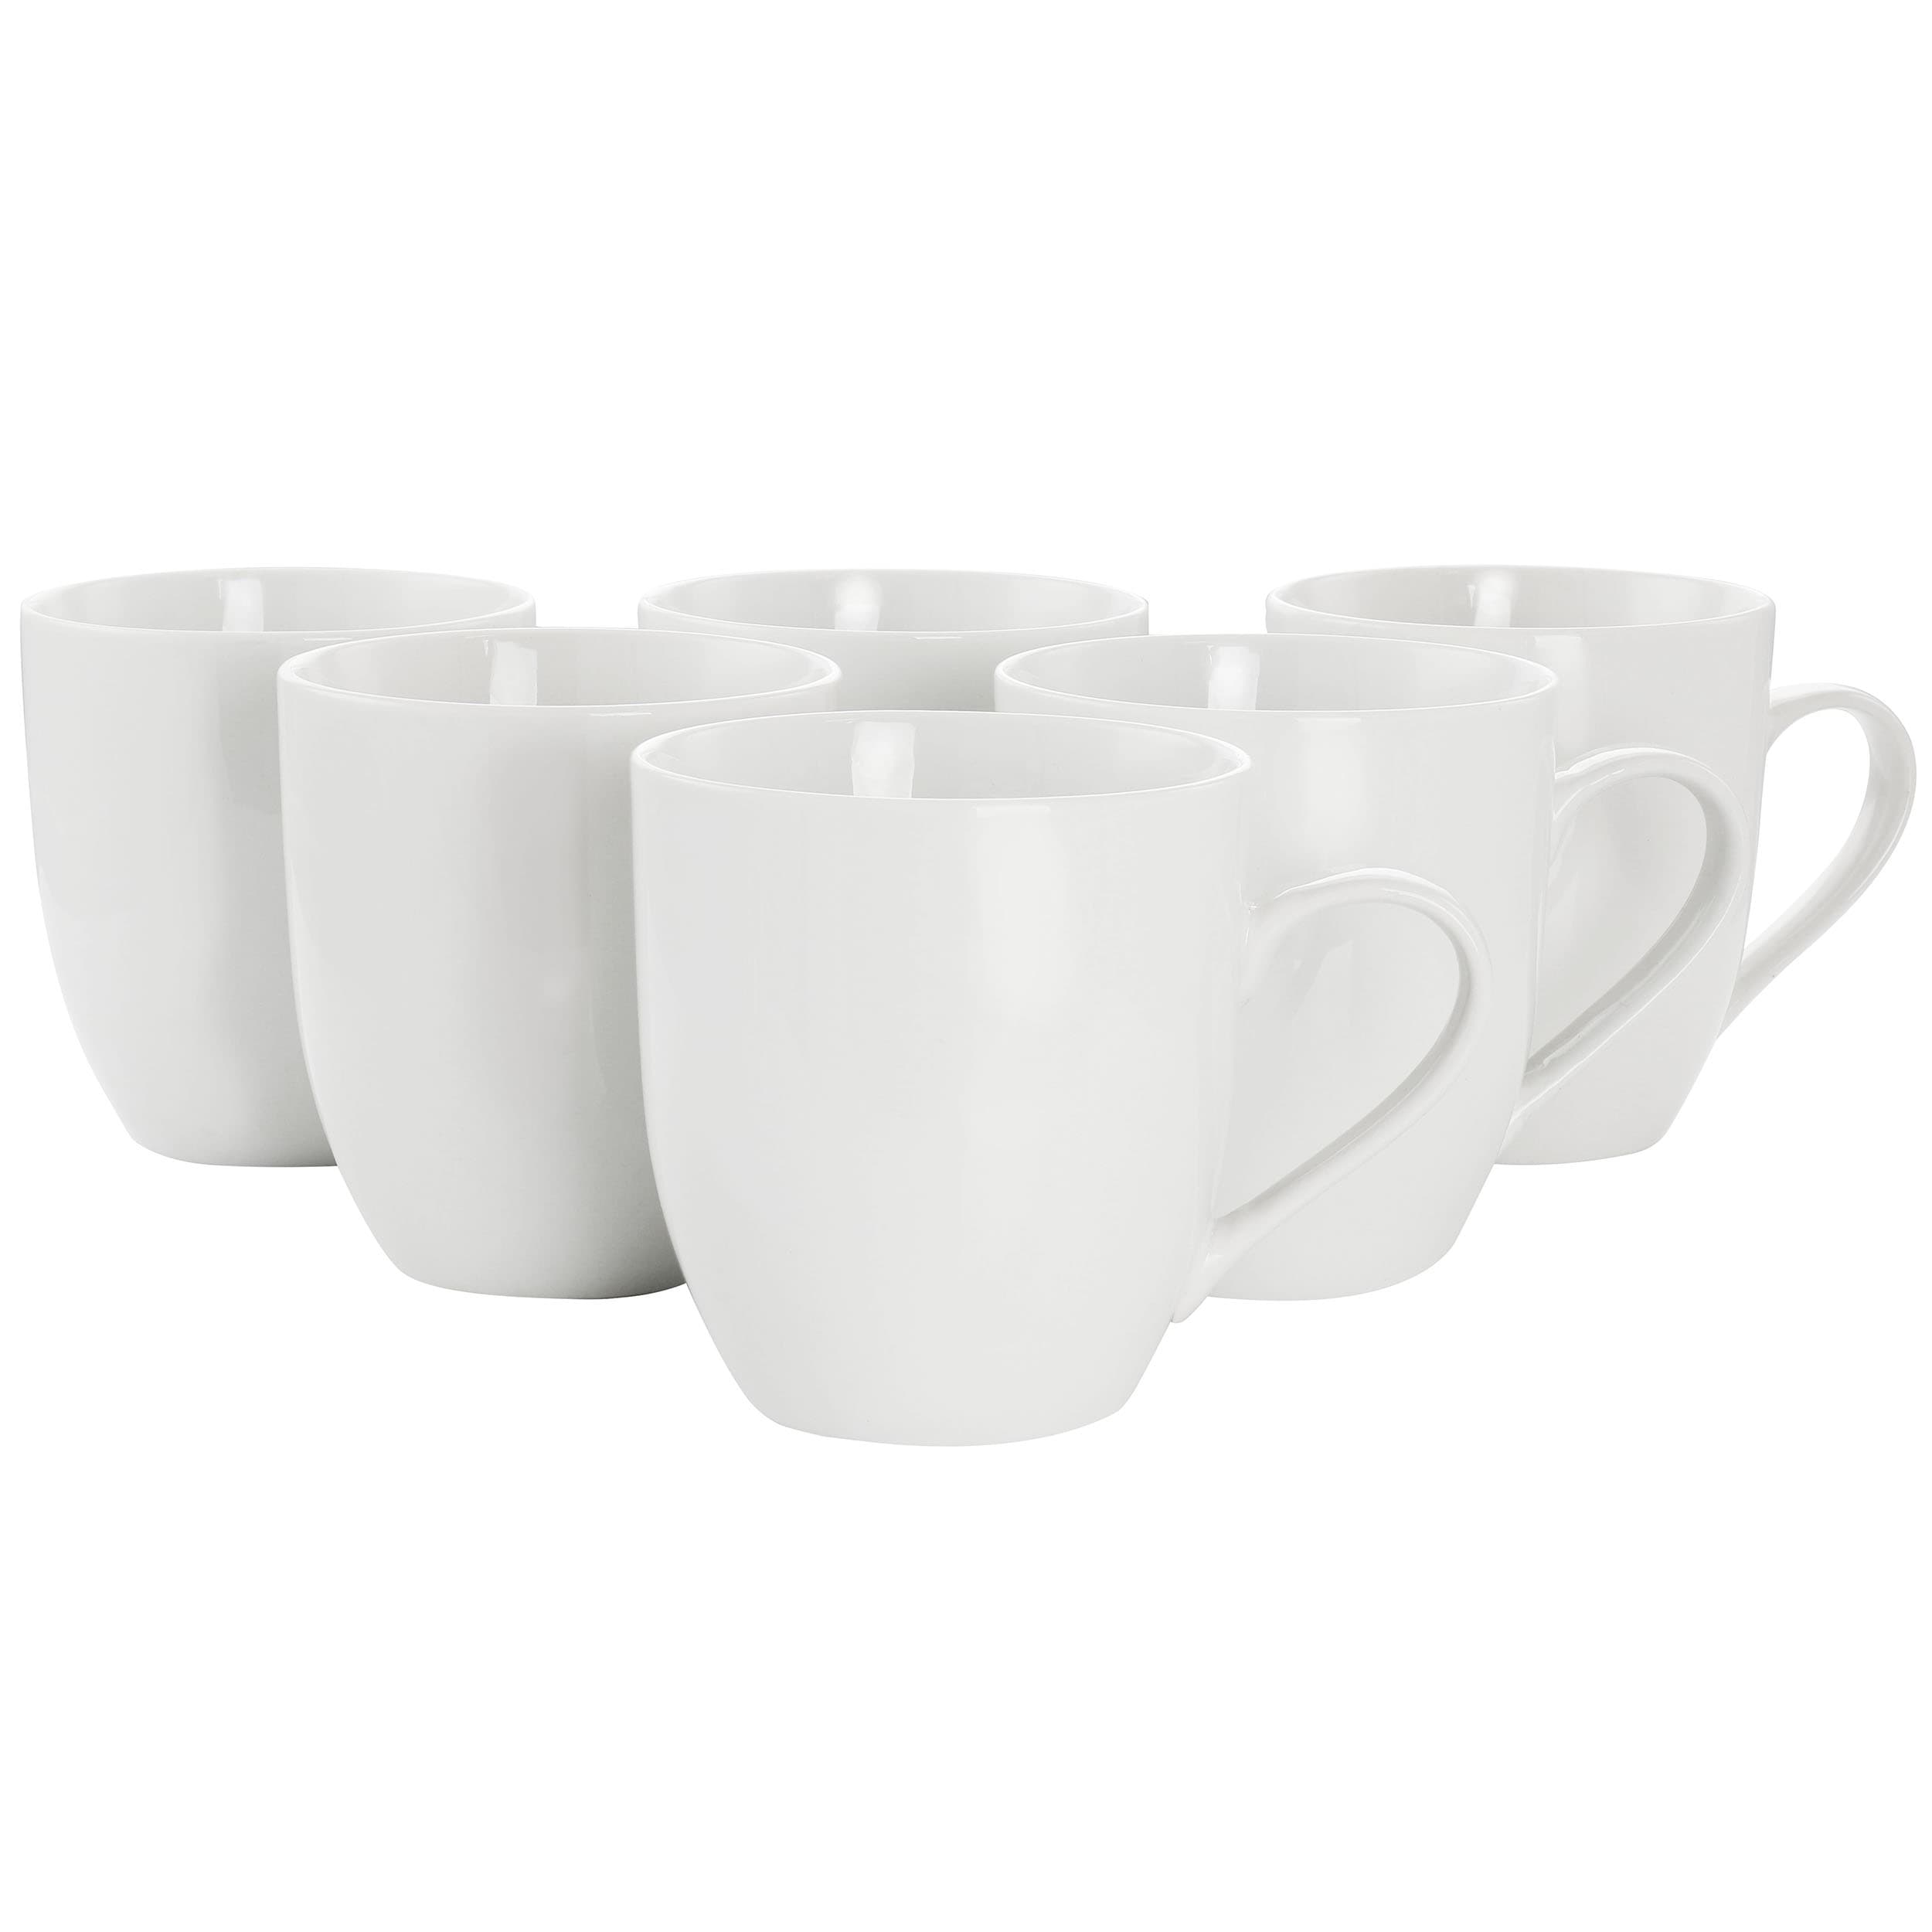 Our Table Simple White 6 Piece Fine Ceramic 16.65oz Mug Set in White